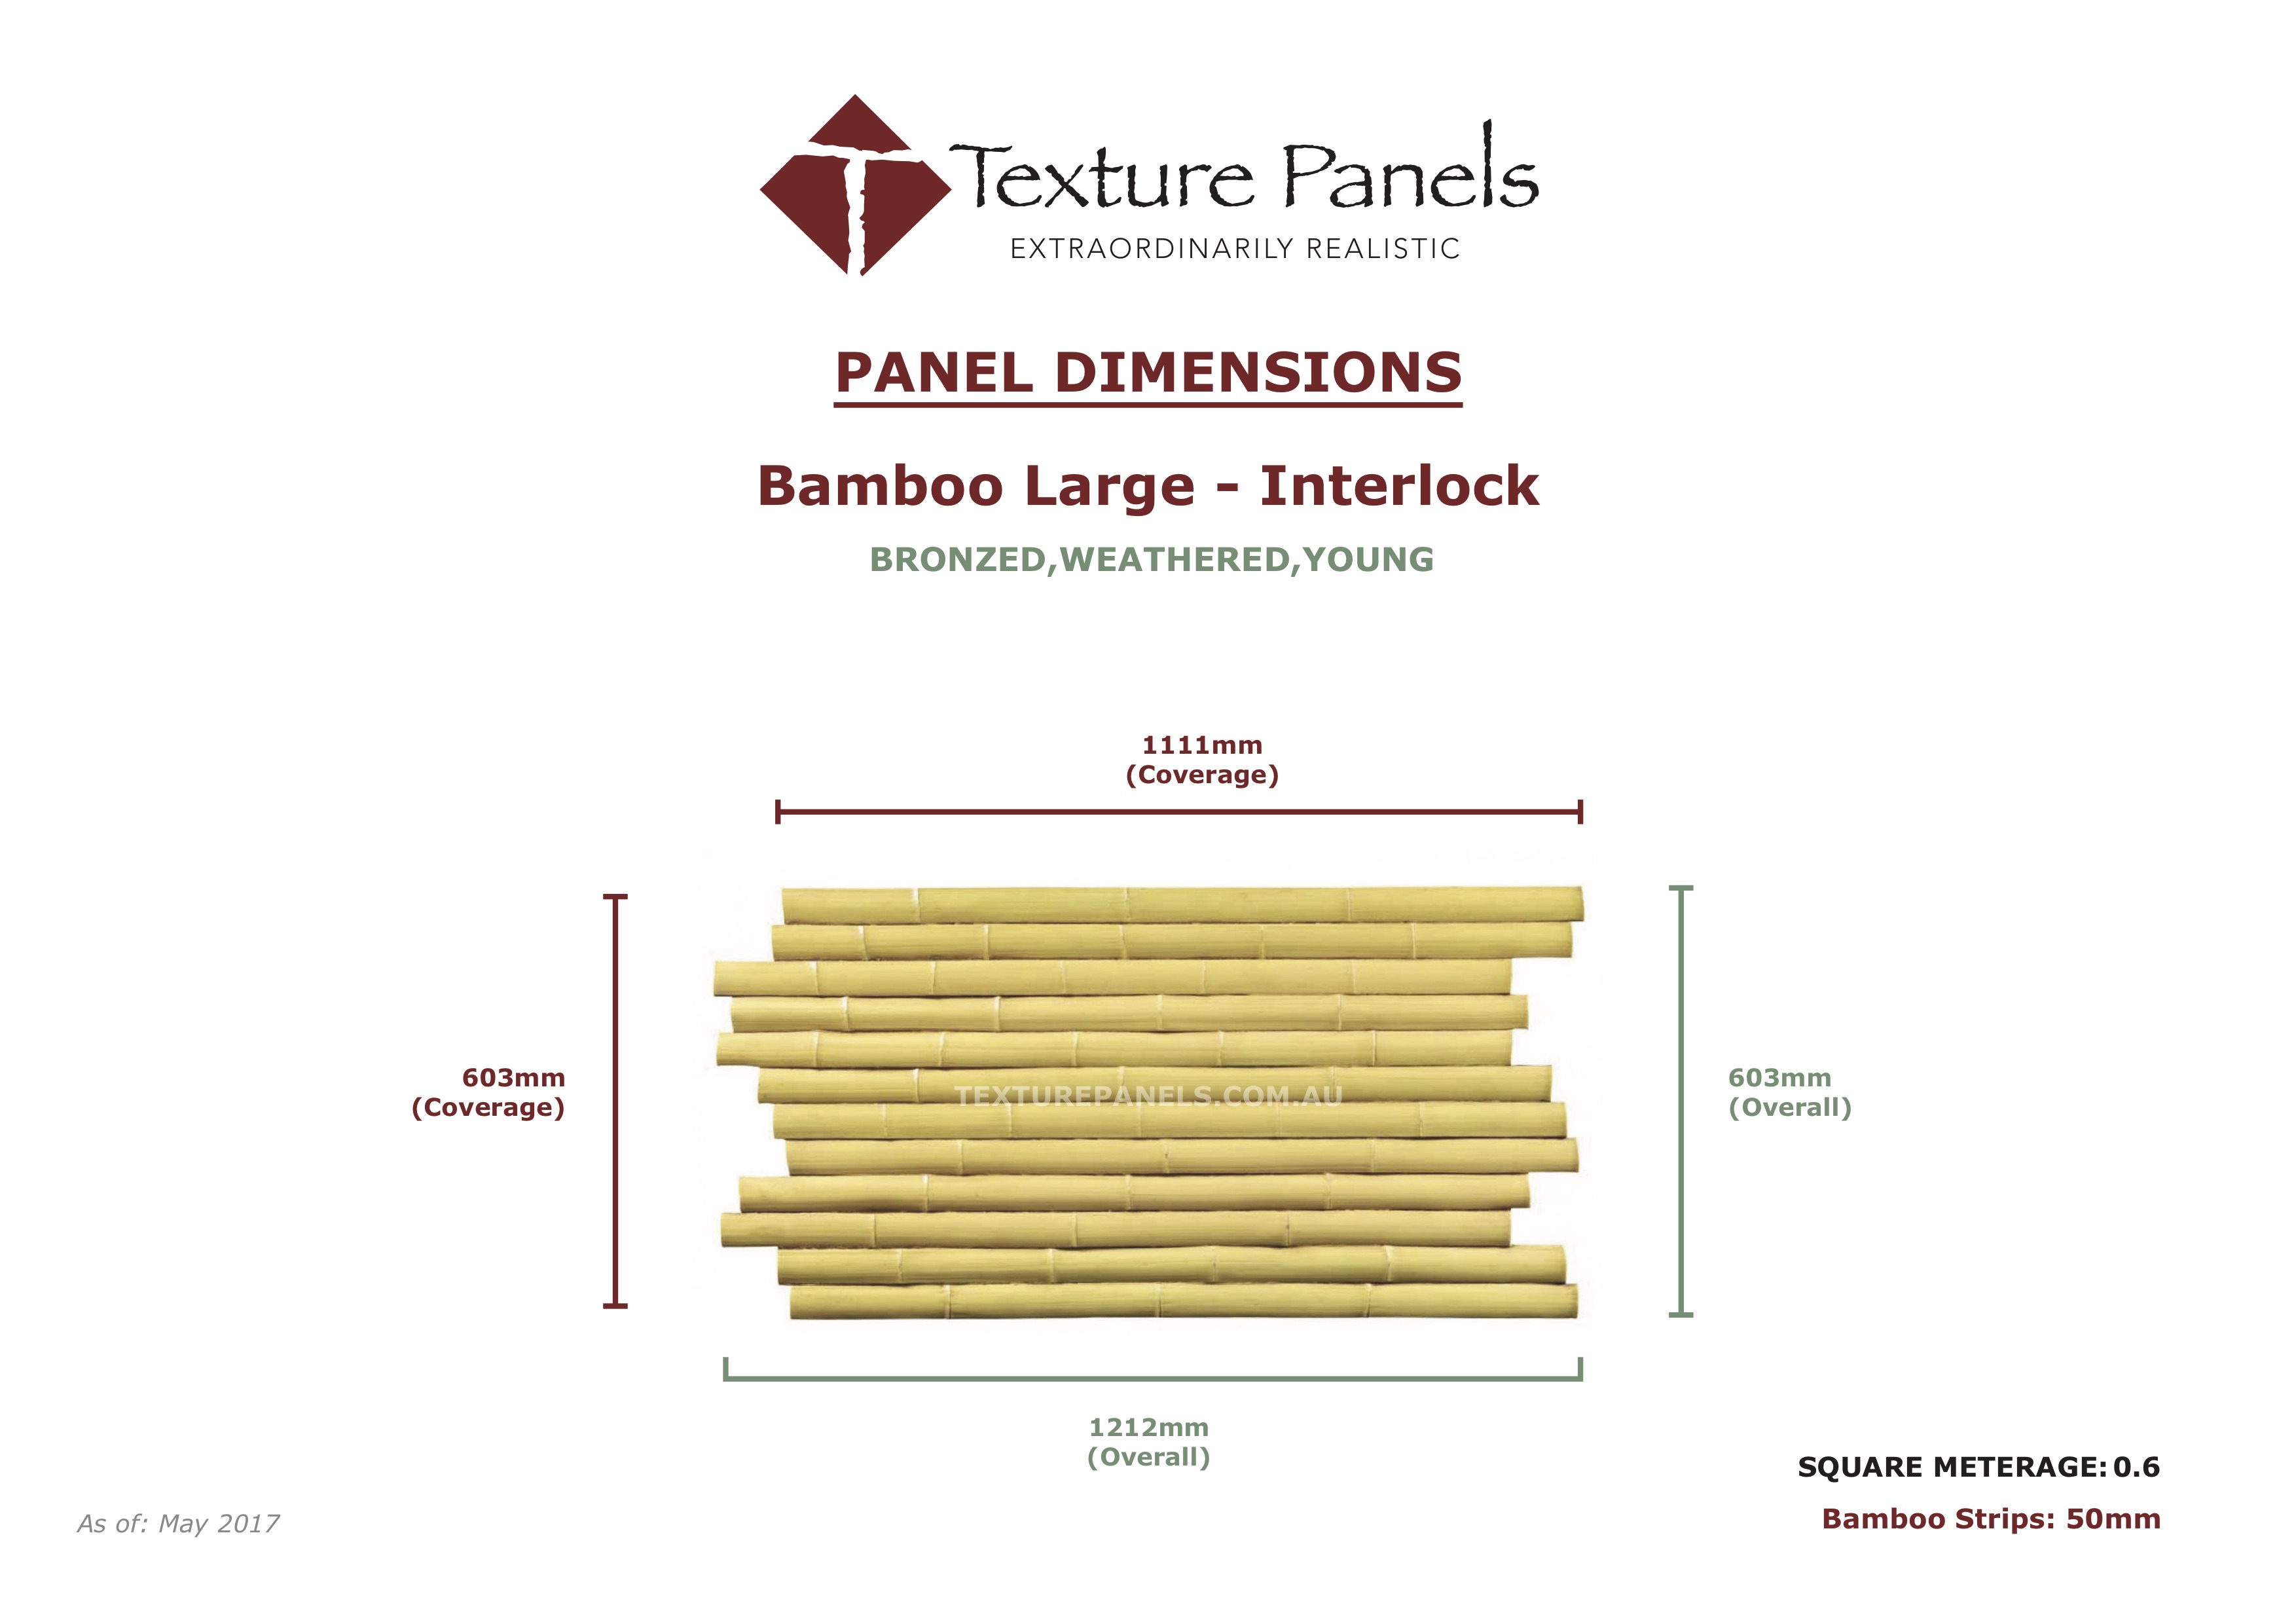 Bamboo Large Interlocked - Dimensions